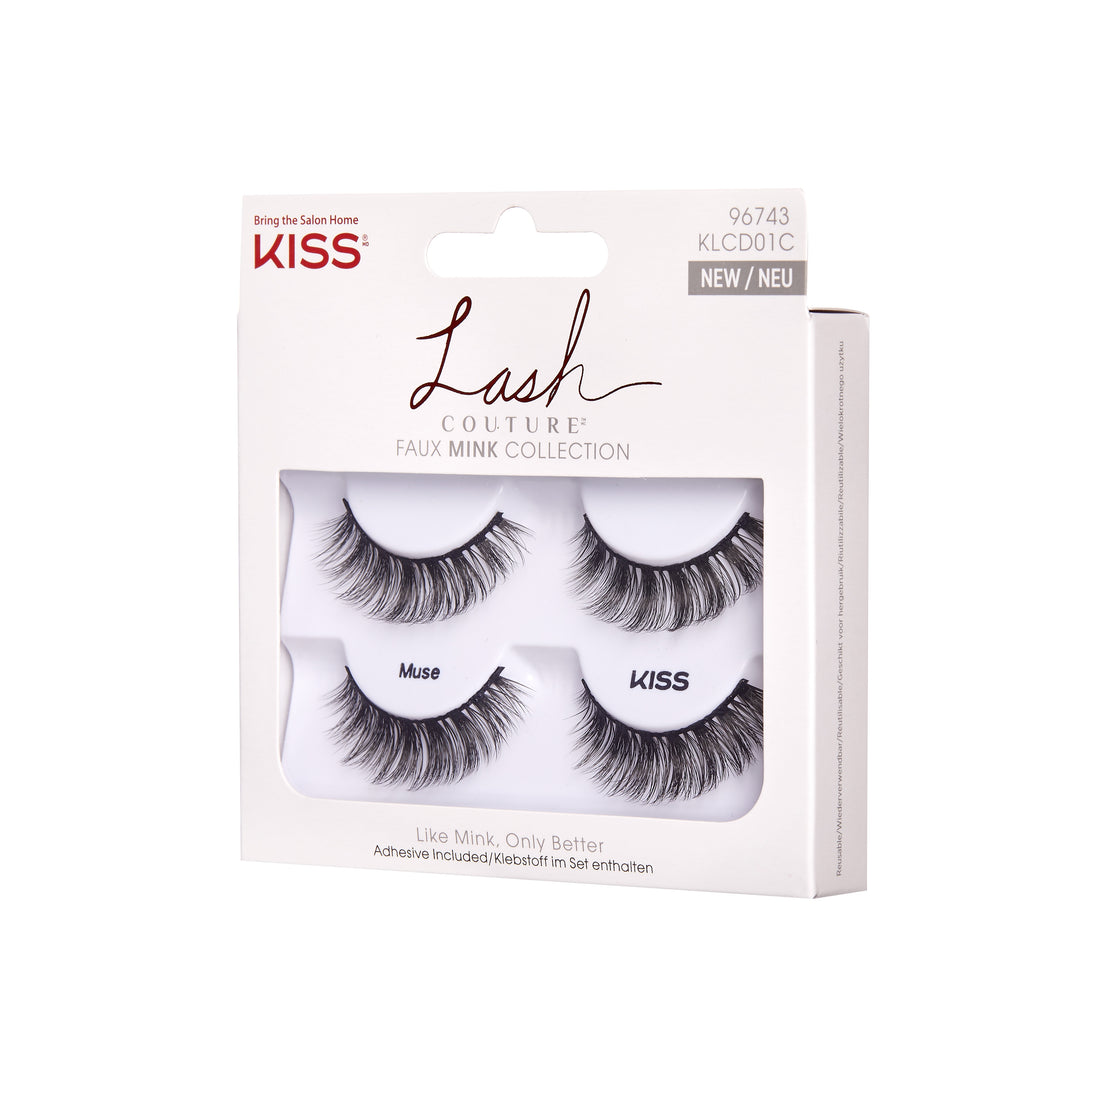 KISS Lash Couture Faux Mink Double-Pack - Muse